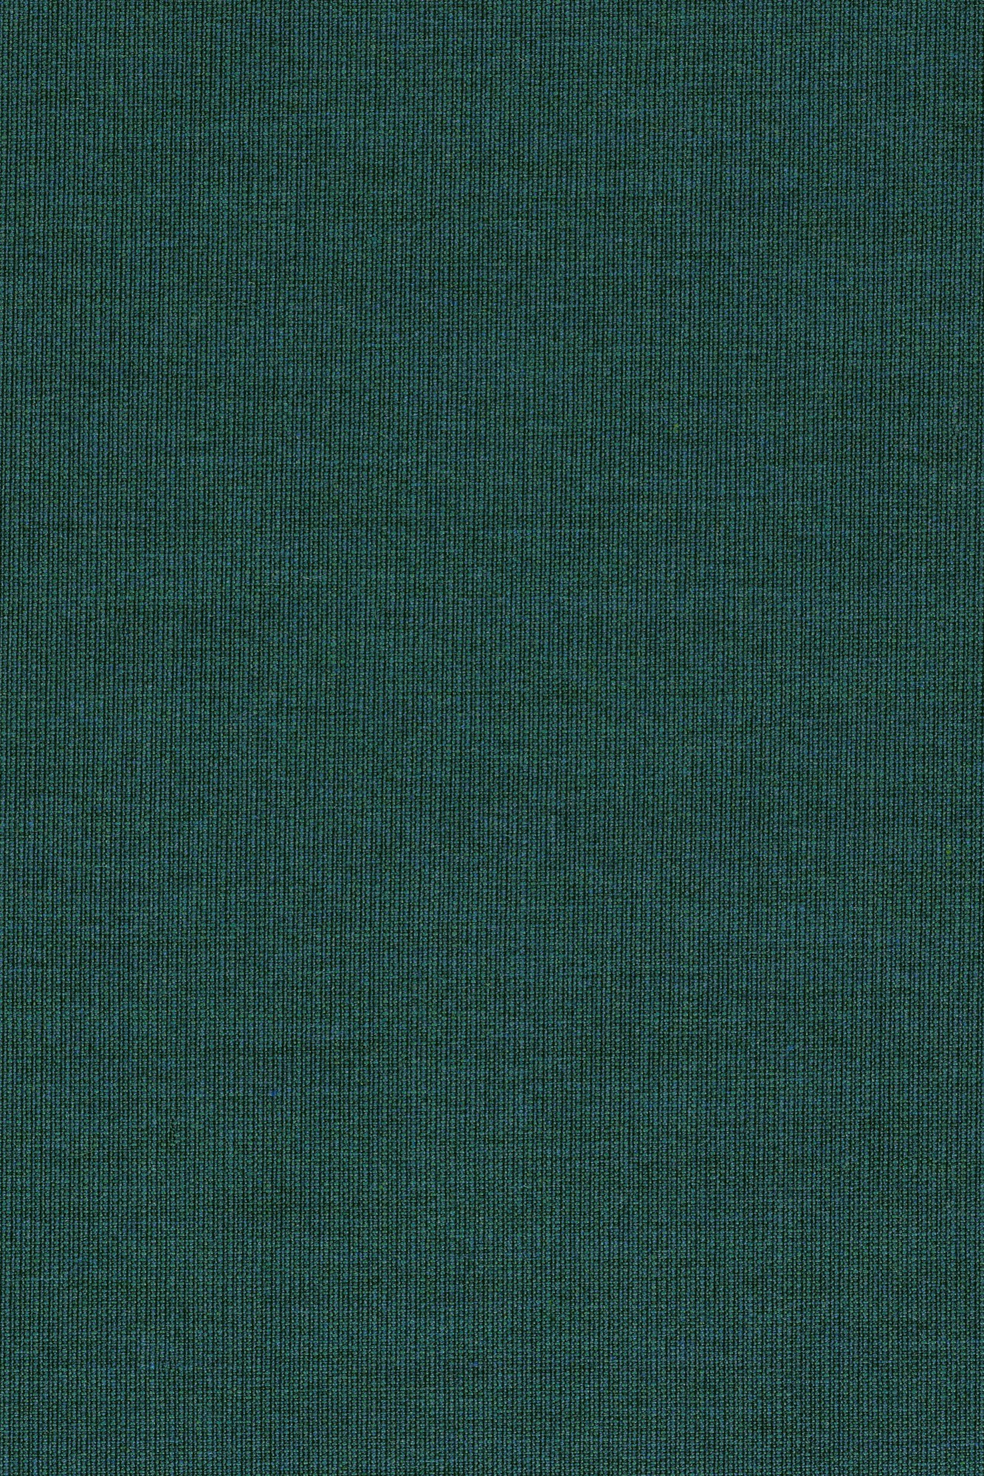 Fabric sample Canvas 2 984 green